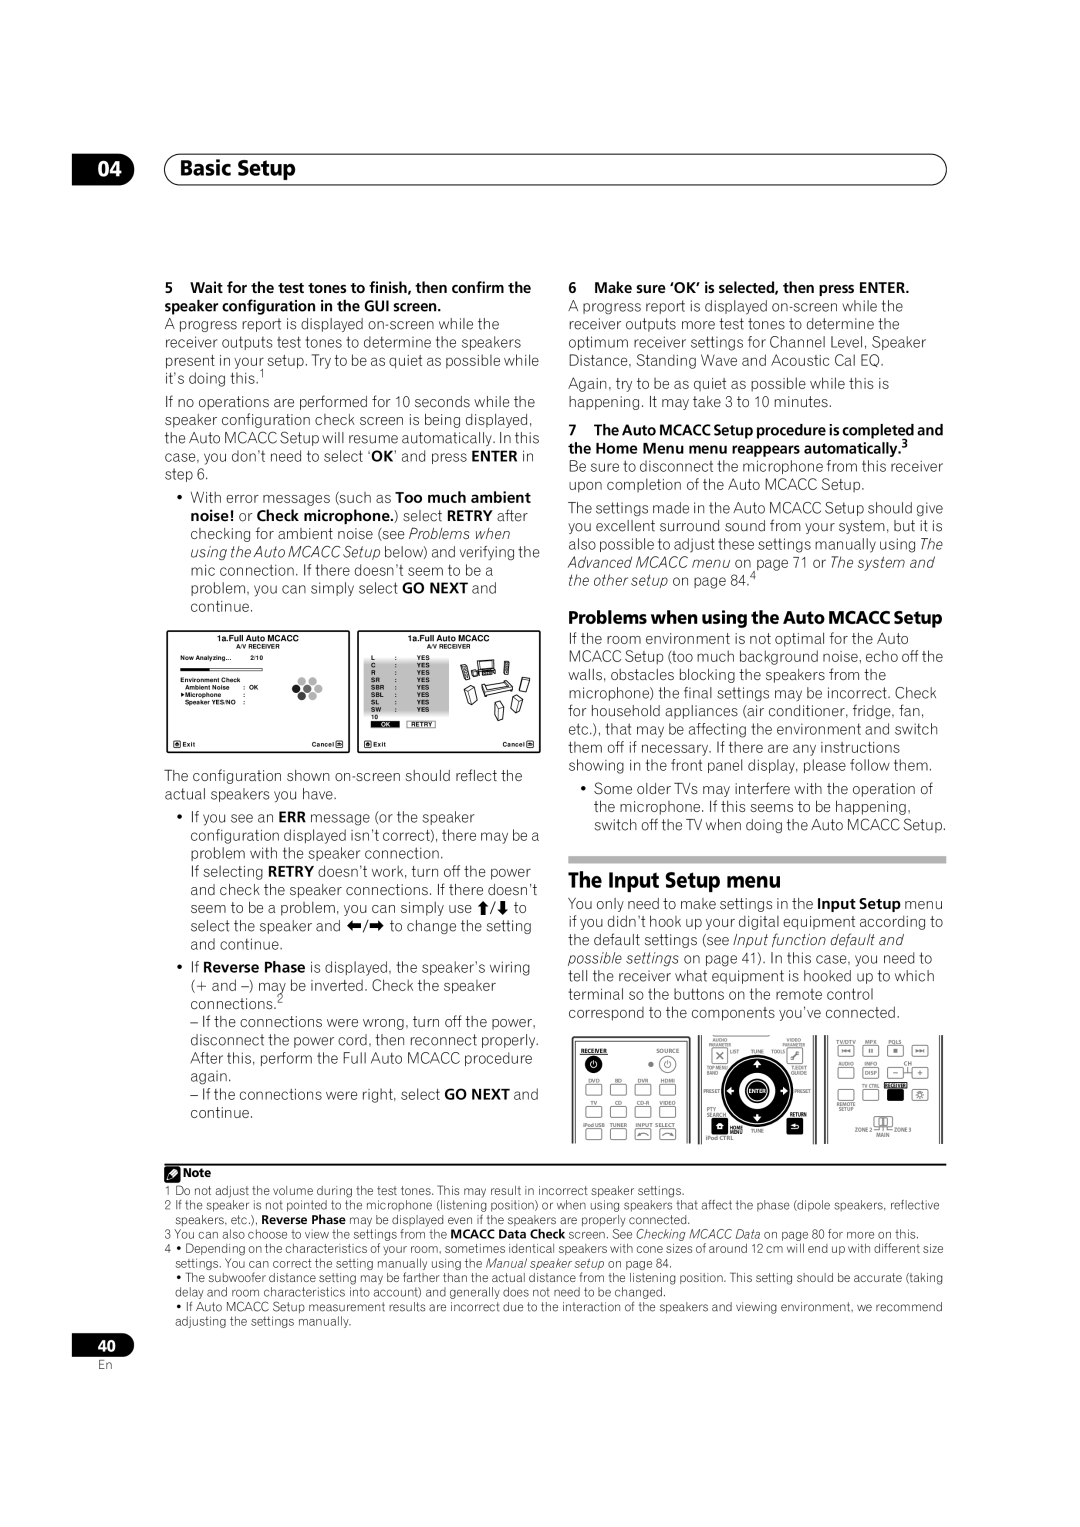 Pioneer VSX-LX52 manual 04Basic Setup, The Input Setup menu, Problems when using the Auto MCACC Setup 